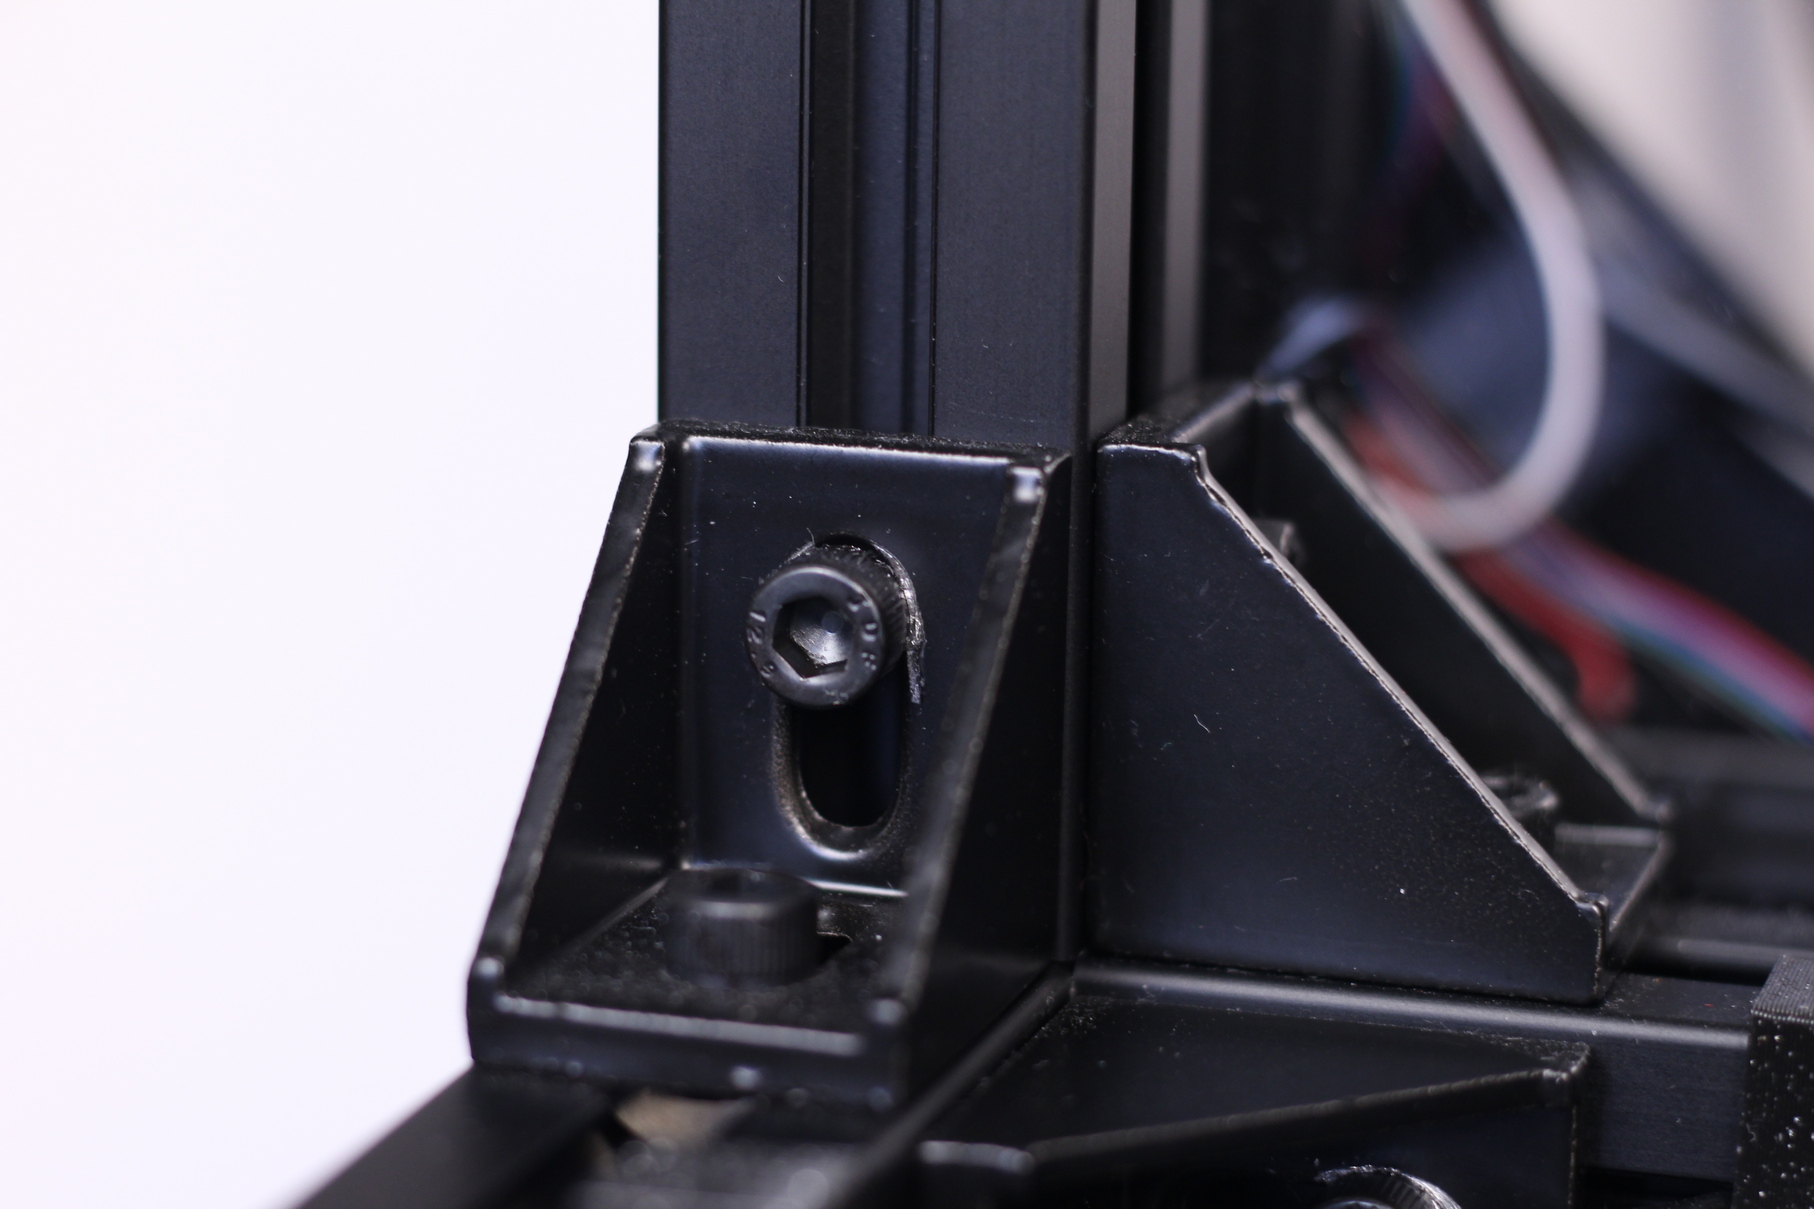 V Core 3 corners | RatRig V-Core 3 Review: Premium CoreXY 3D Printer Kit